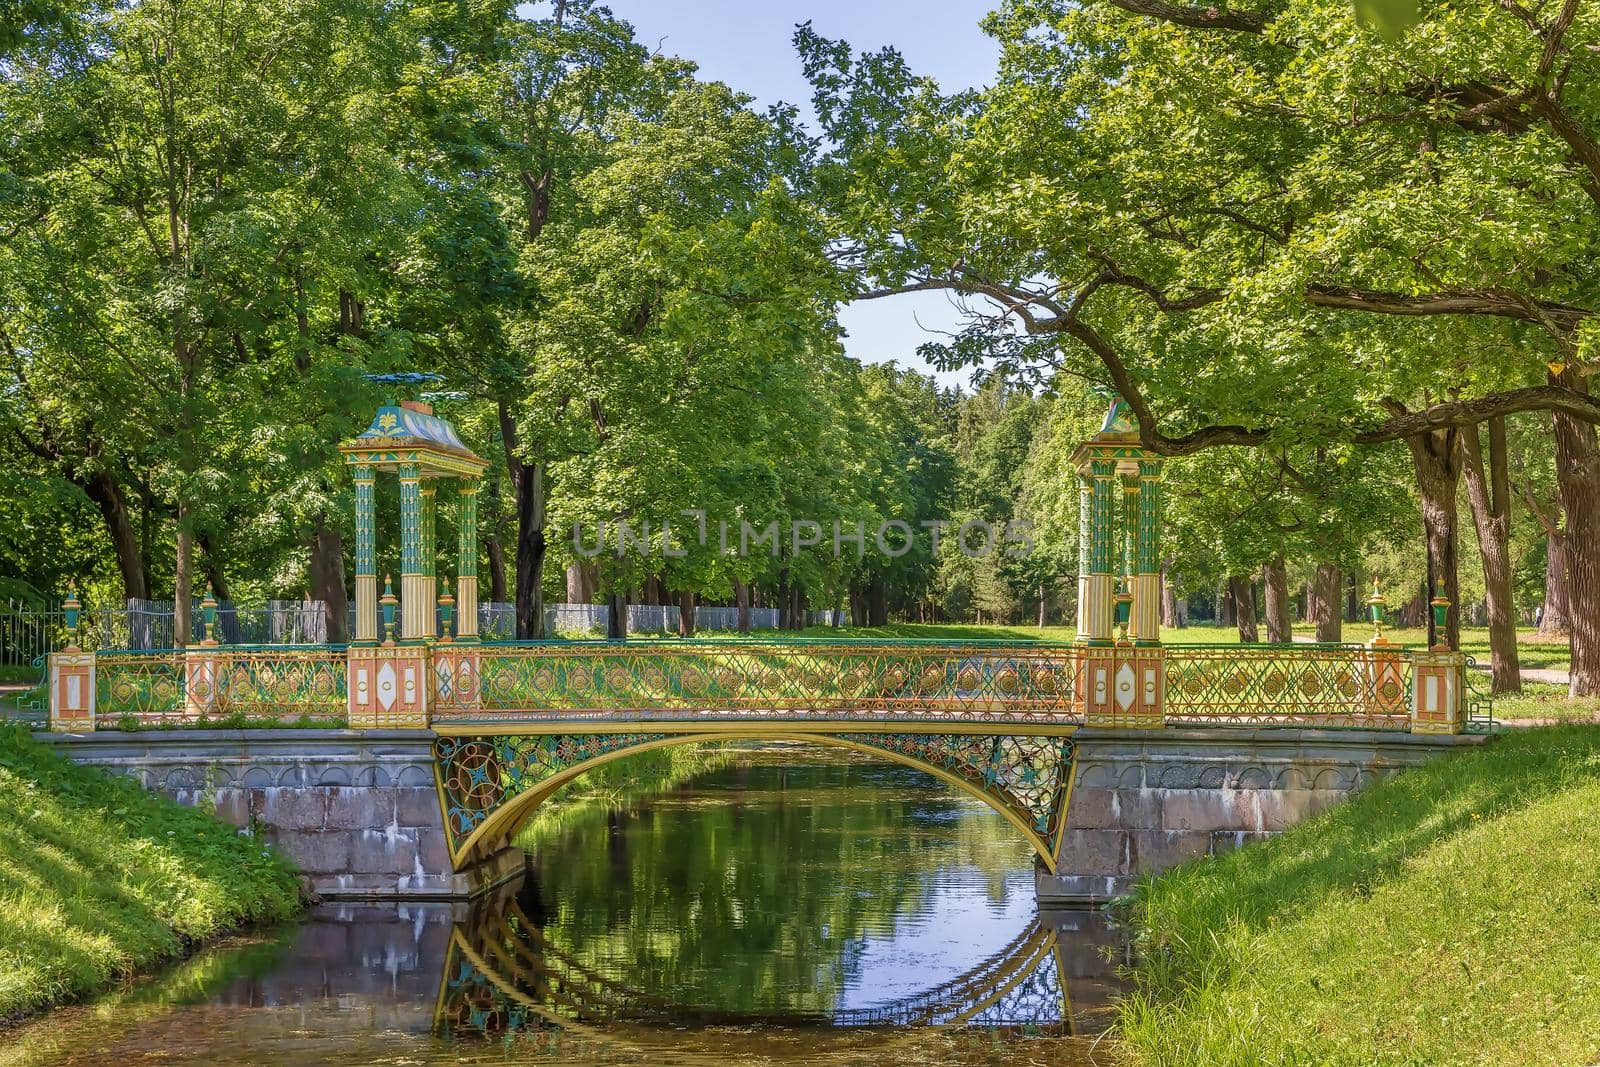 Small Chinese Bridges, Tsarskoye Selo, Russia by borisb17